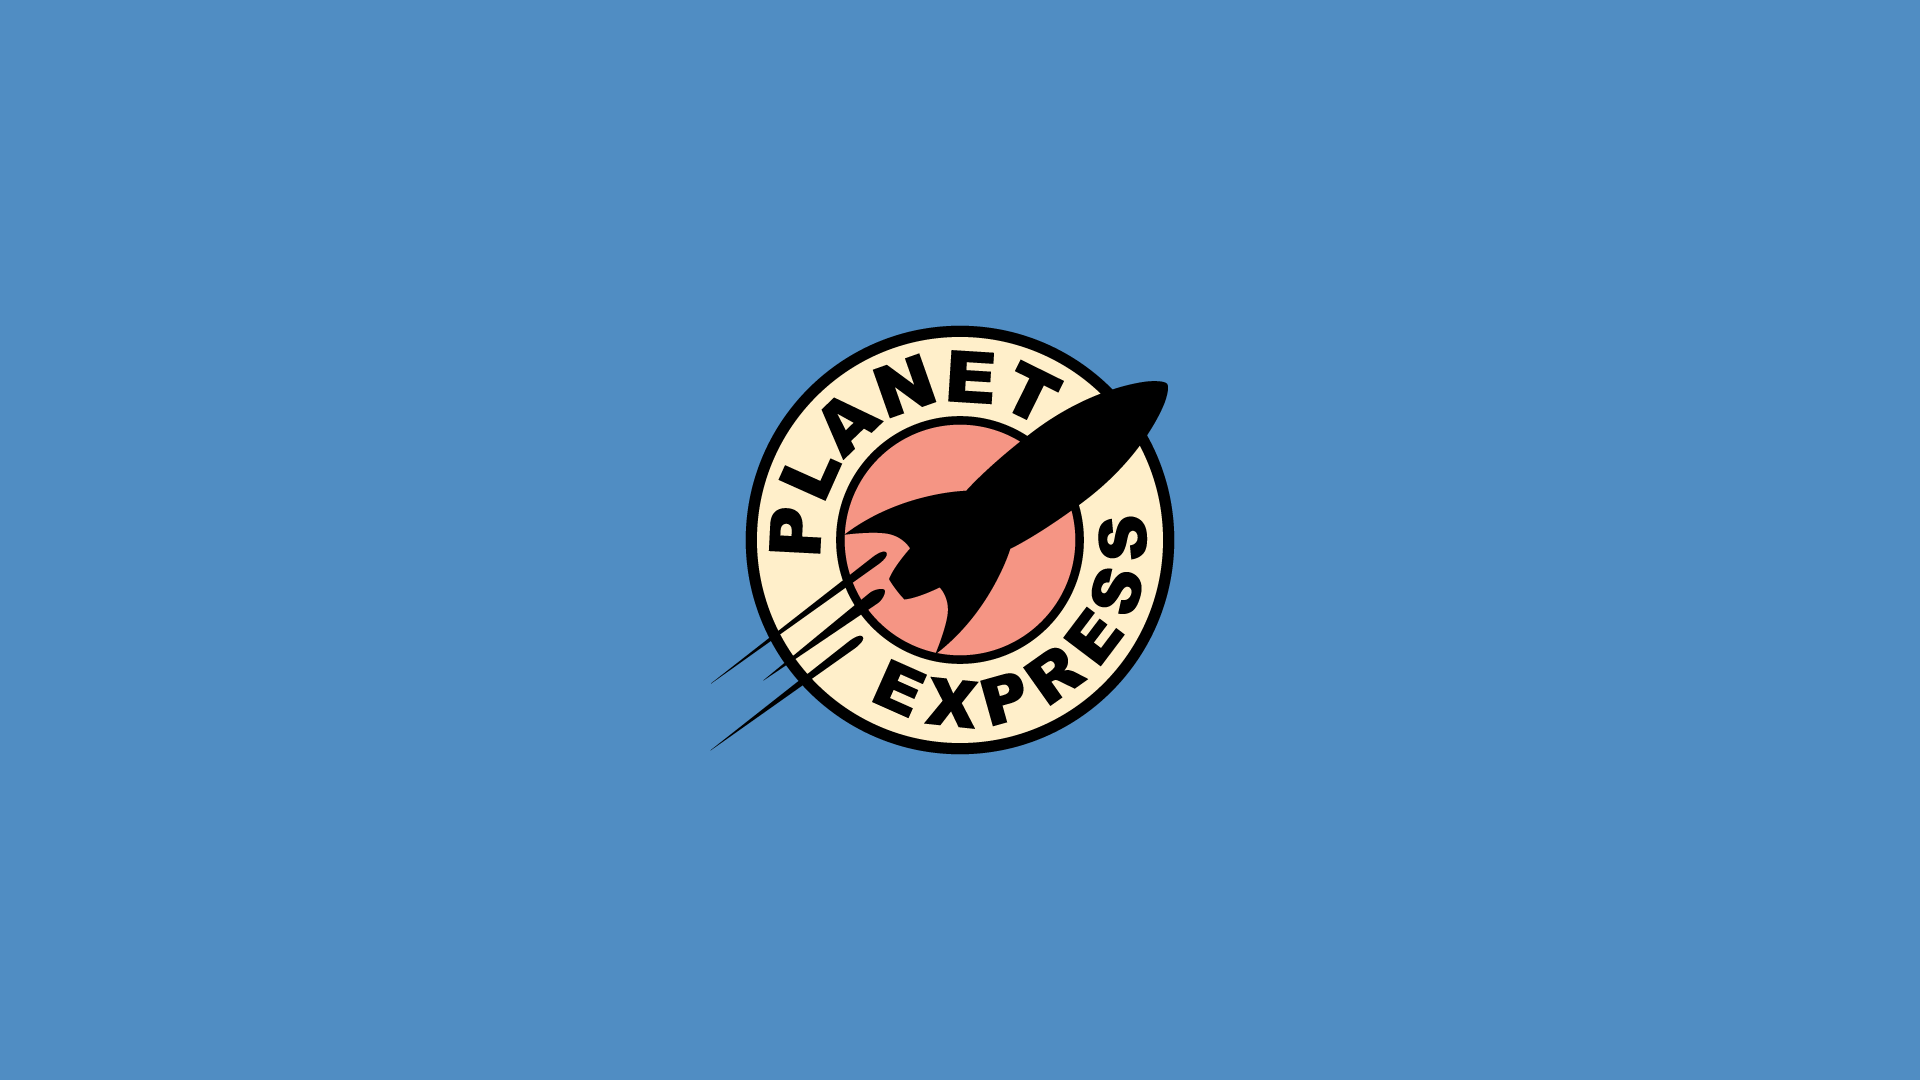 planet express fondo de pantalla,azul,fuente,ilustración,emblema,gráficos